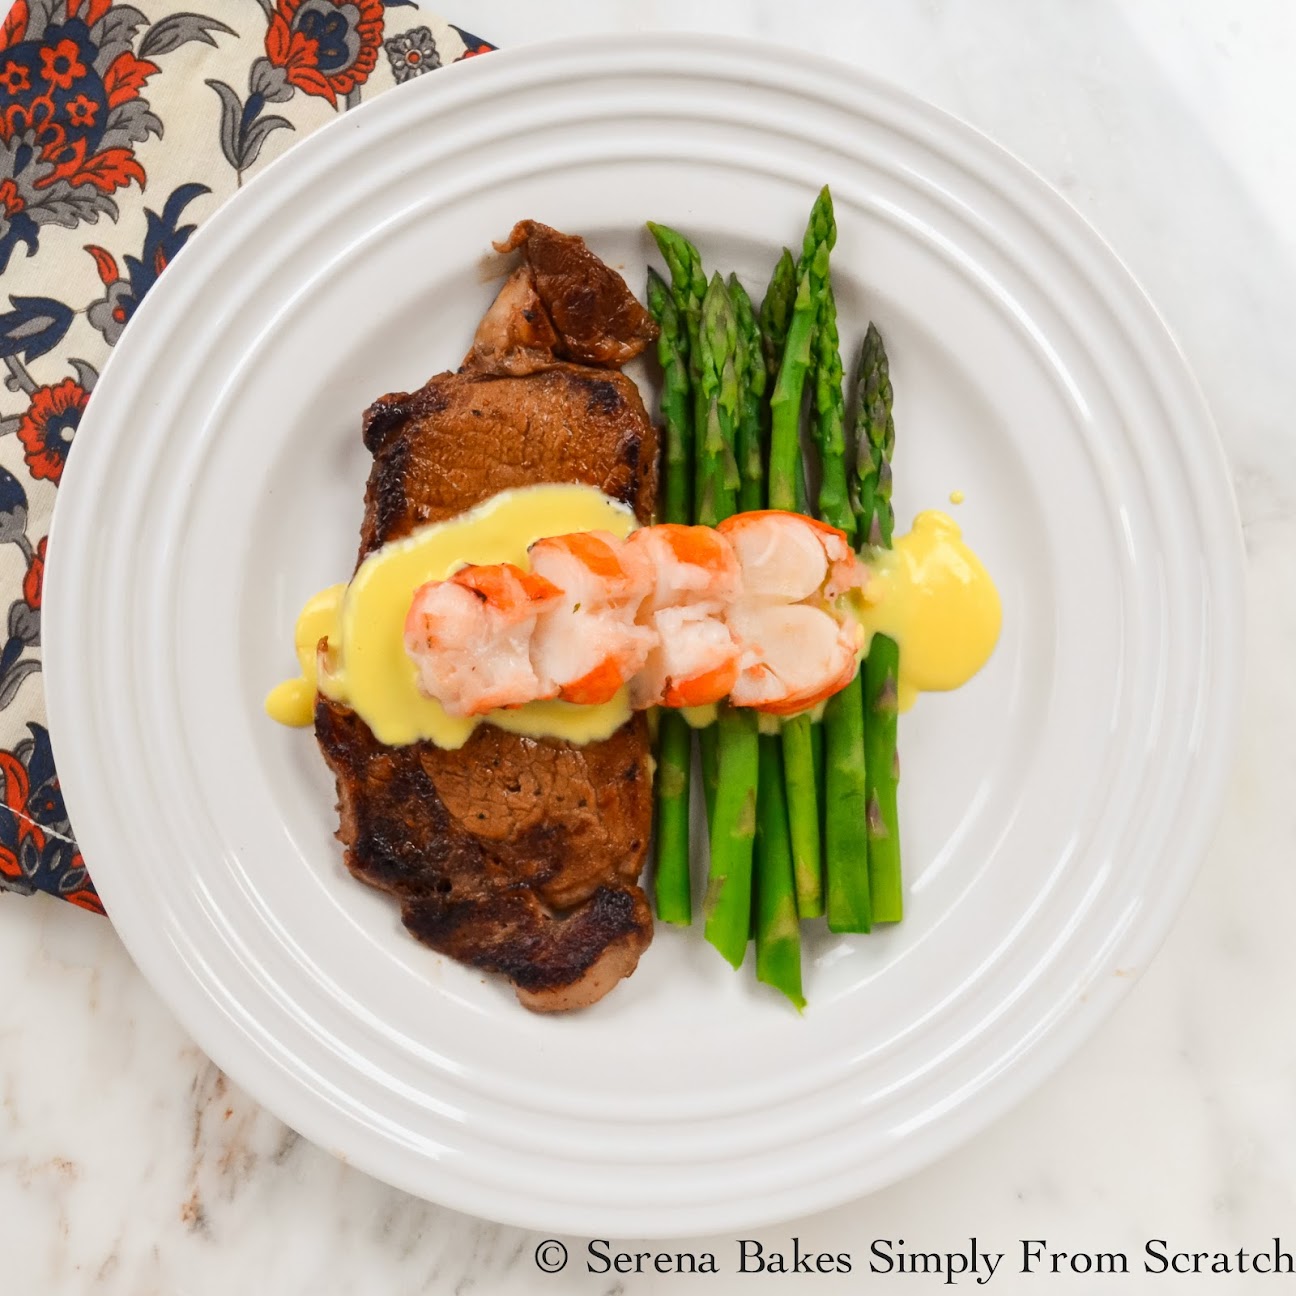 steak and lobster dinner menu ideas